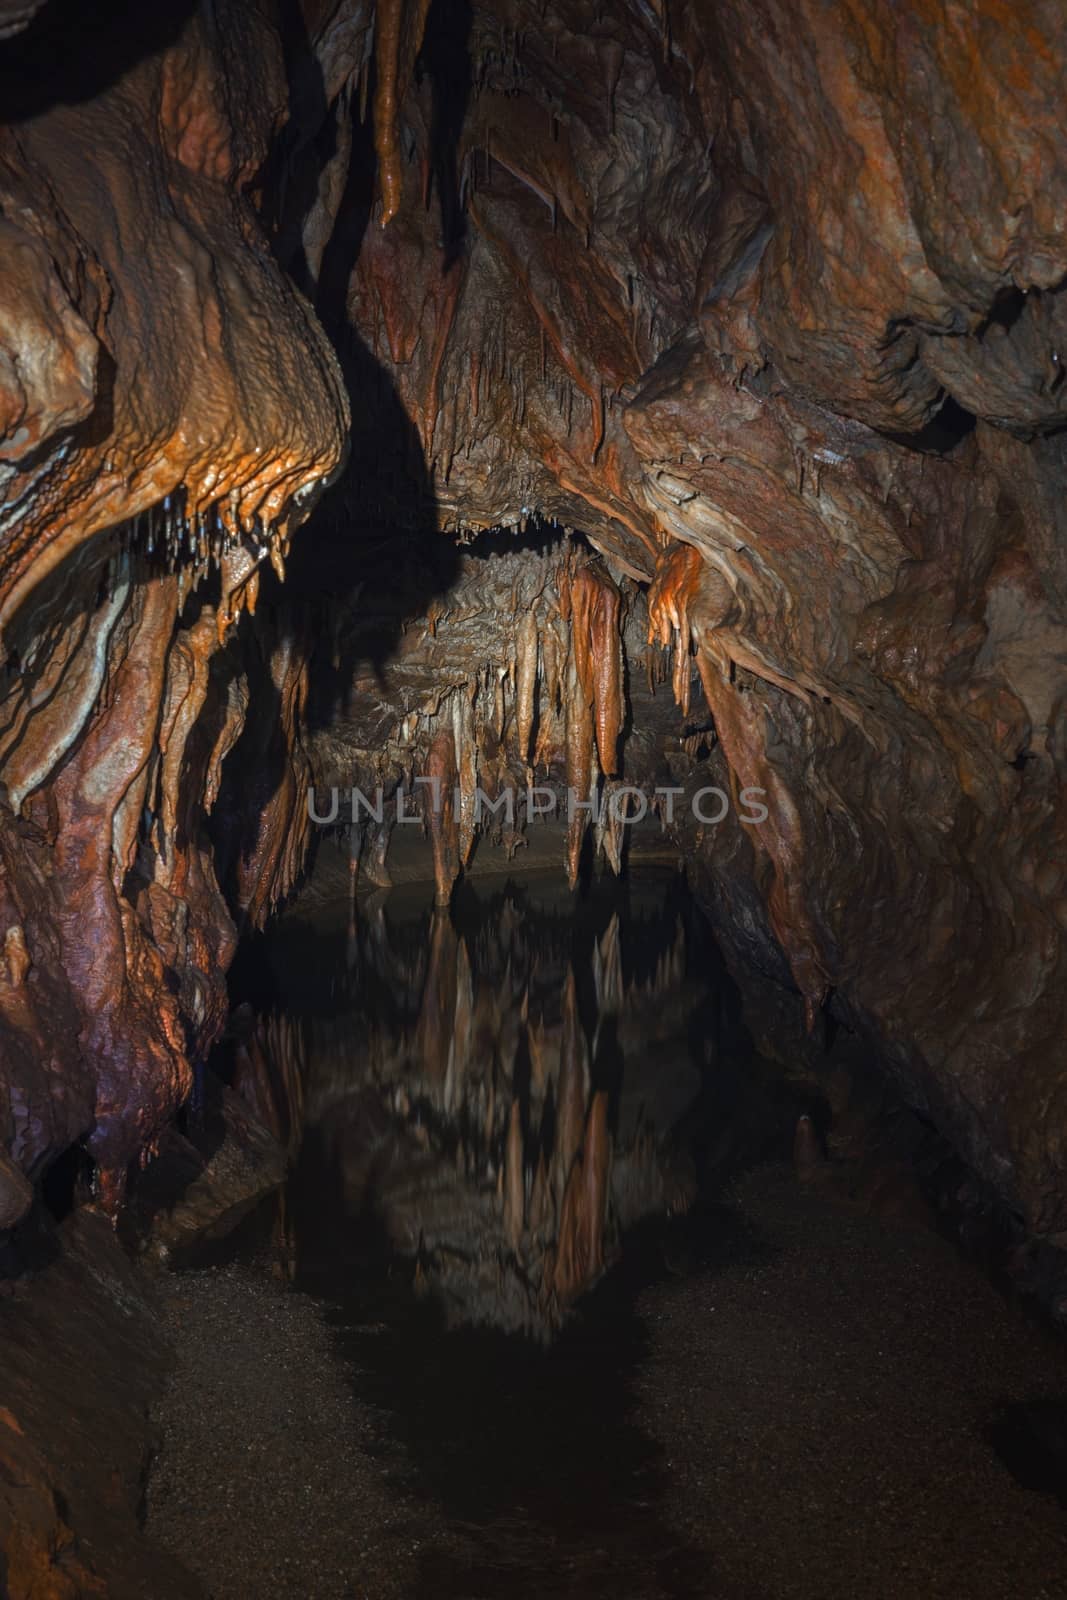 Underground lake sorrunded by rocks by svedoliver